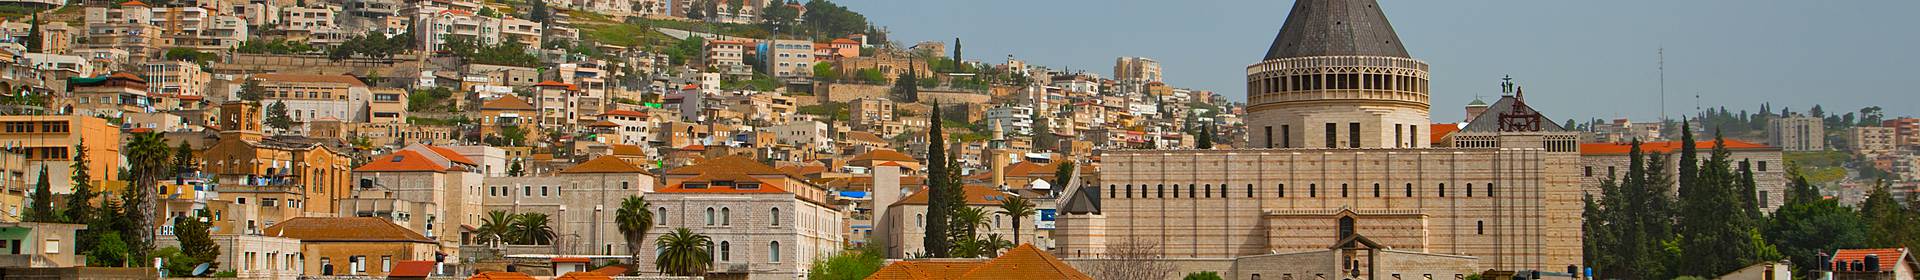 Nazareth